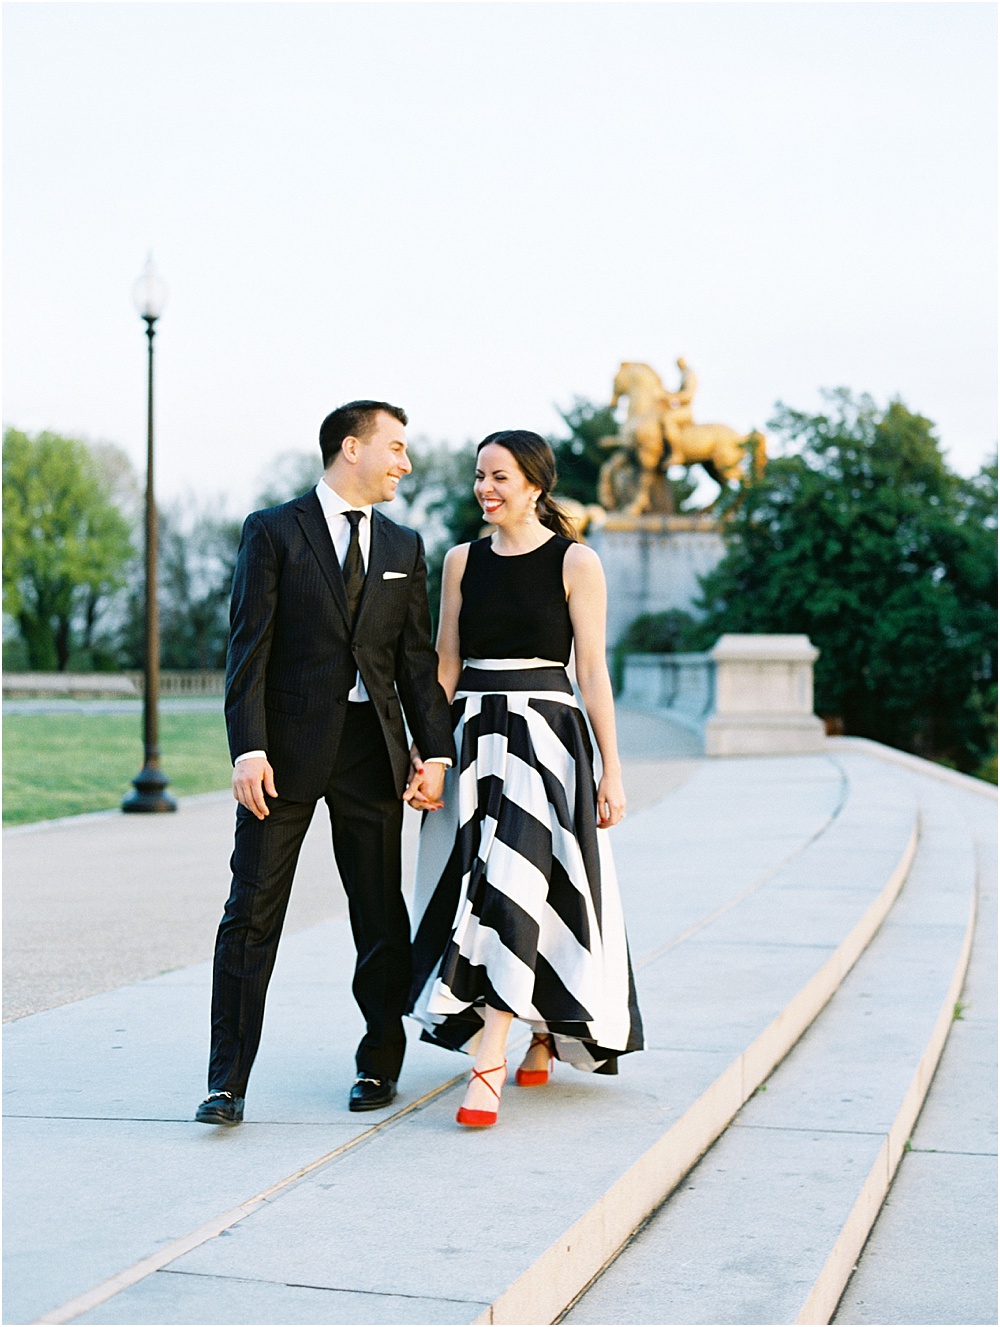 Black and White Engagement Dress National Mall Washington DC Engagement Shoot © Bonnie Sen Photography